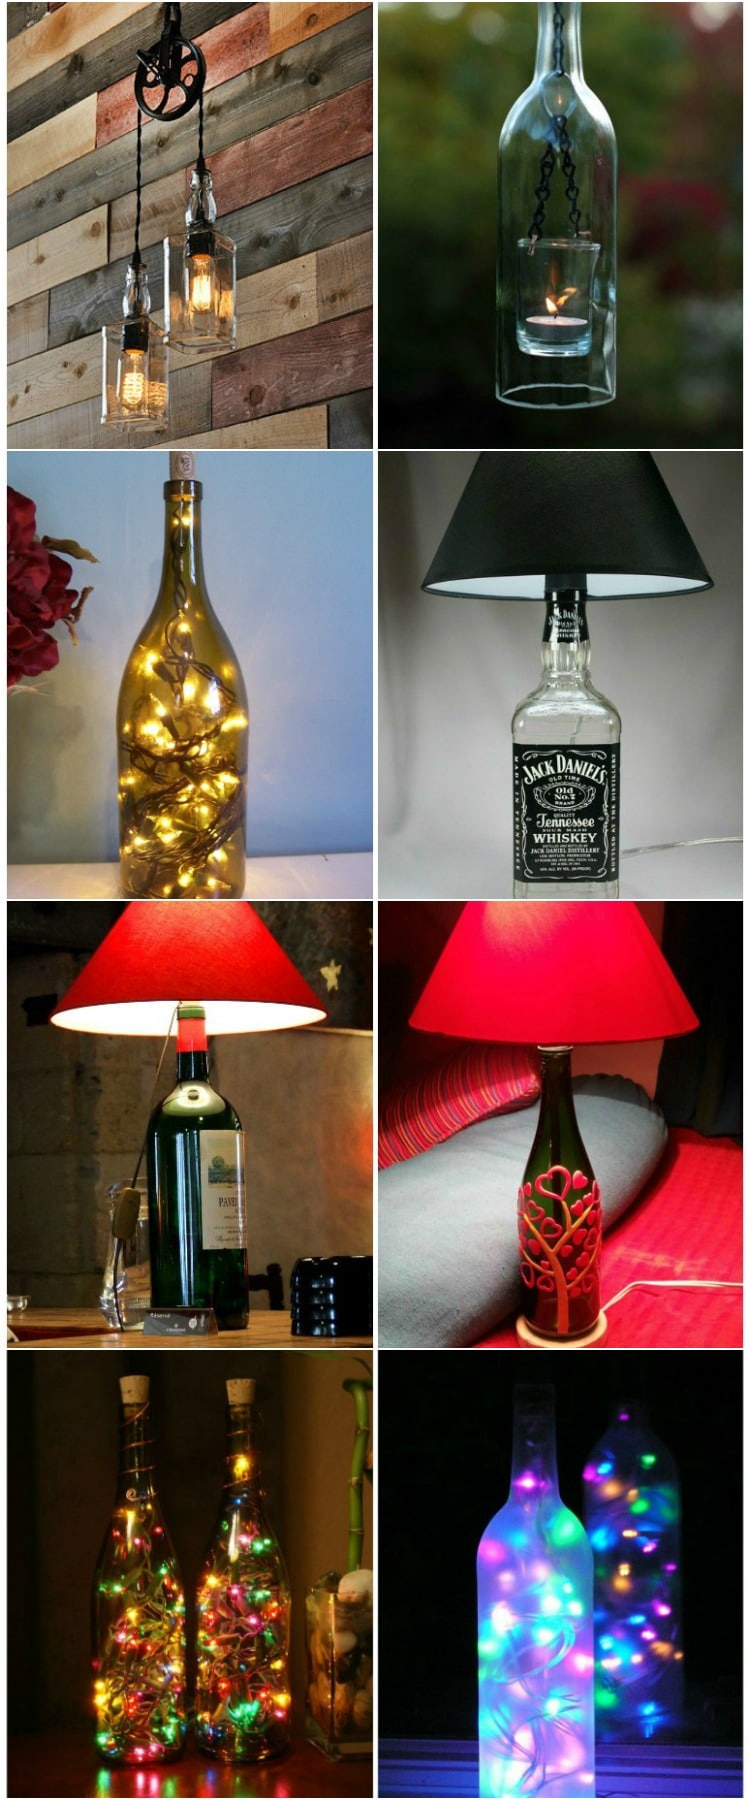 Wanorde Vruchtbaar Gecomprimeerd DIY Bottle Lamp: Make a Table Lamp with Recycled Bottles - iD Lights